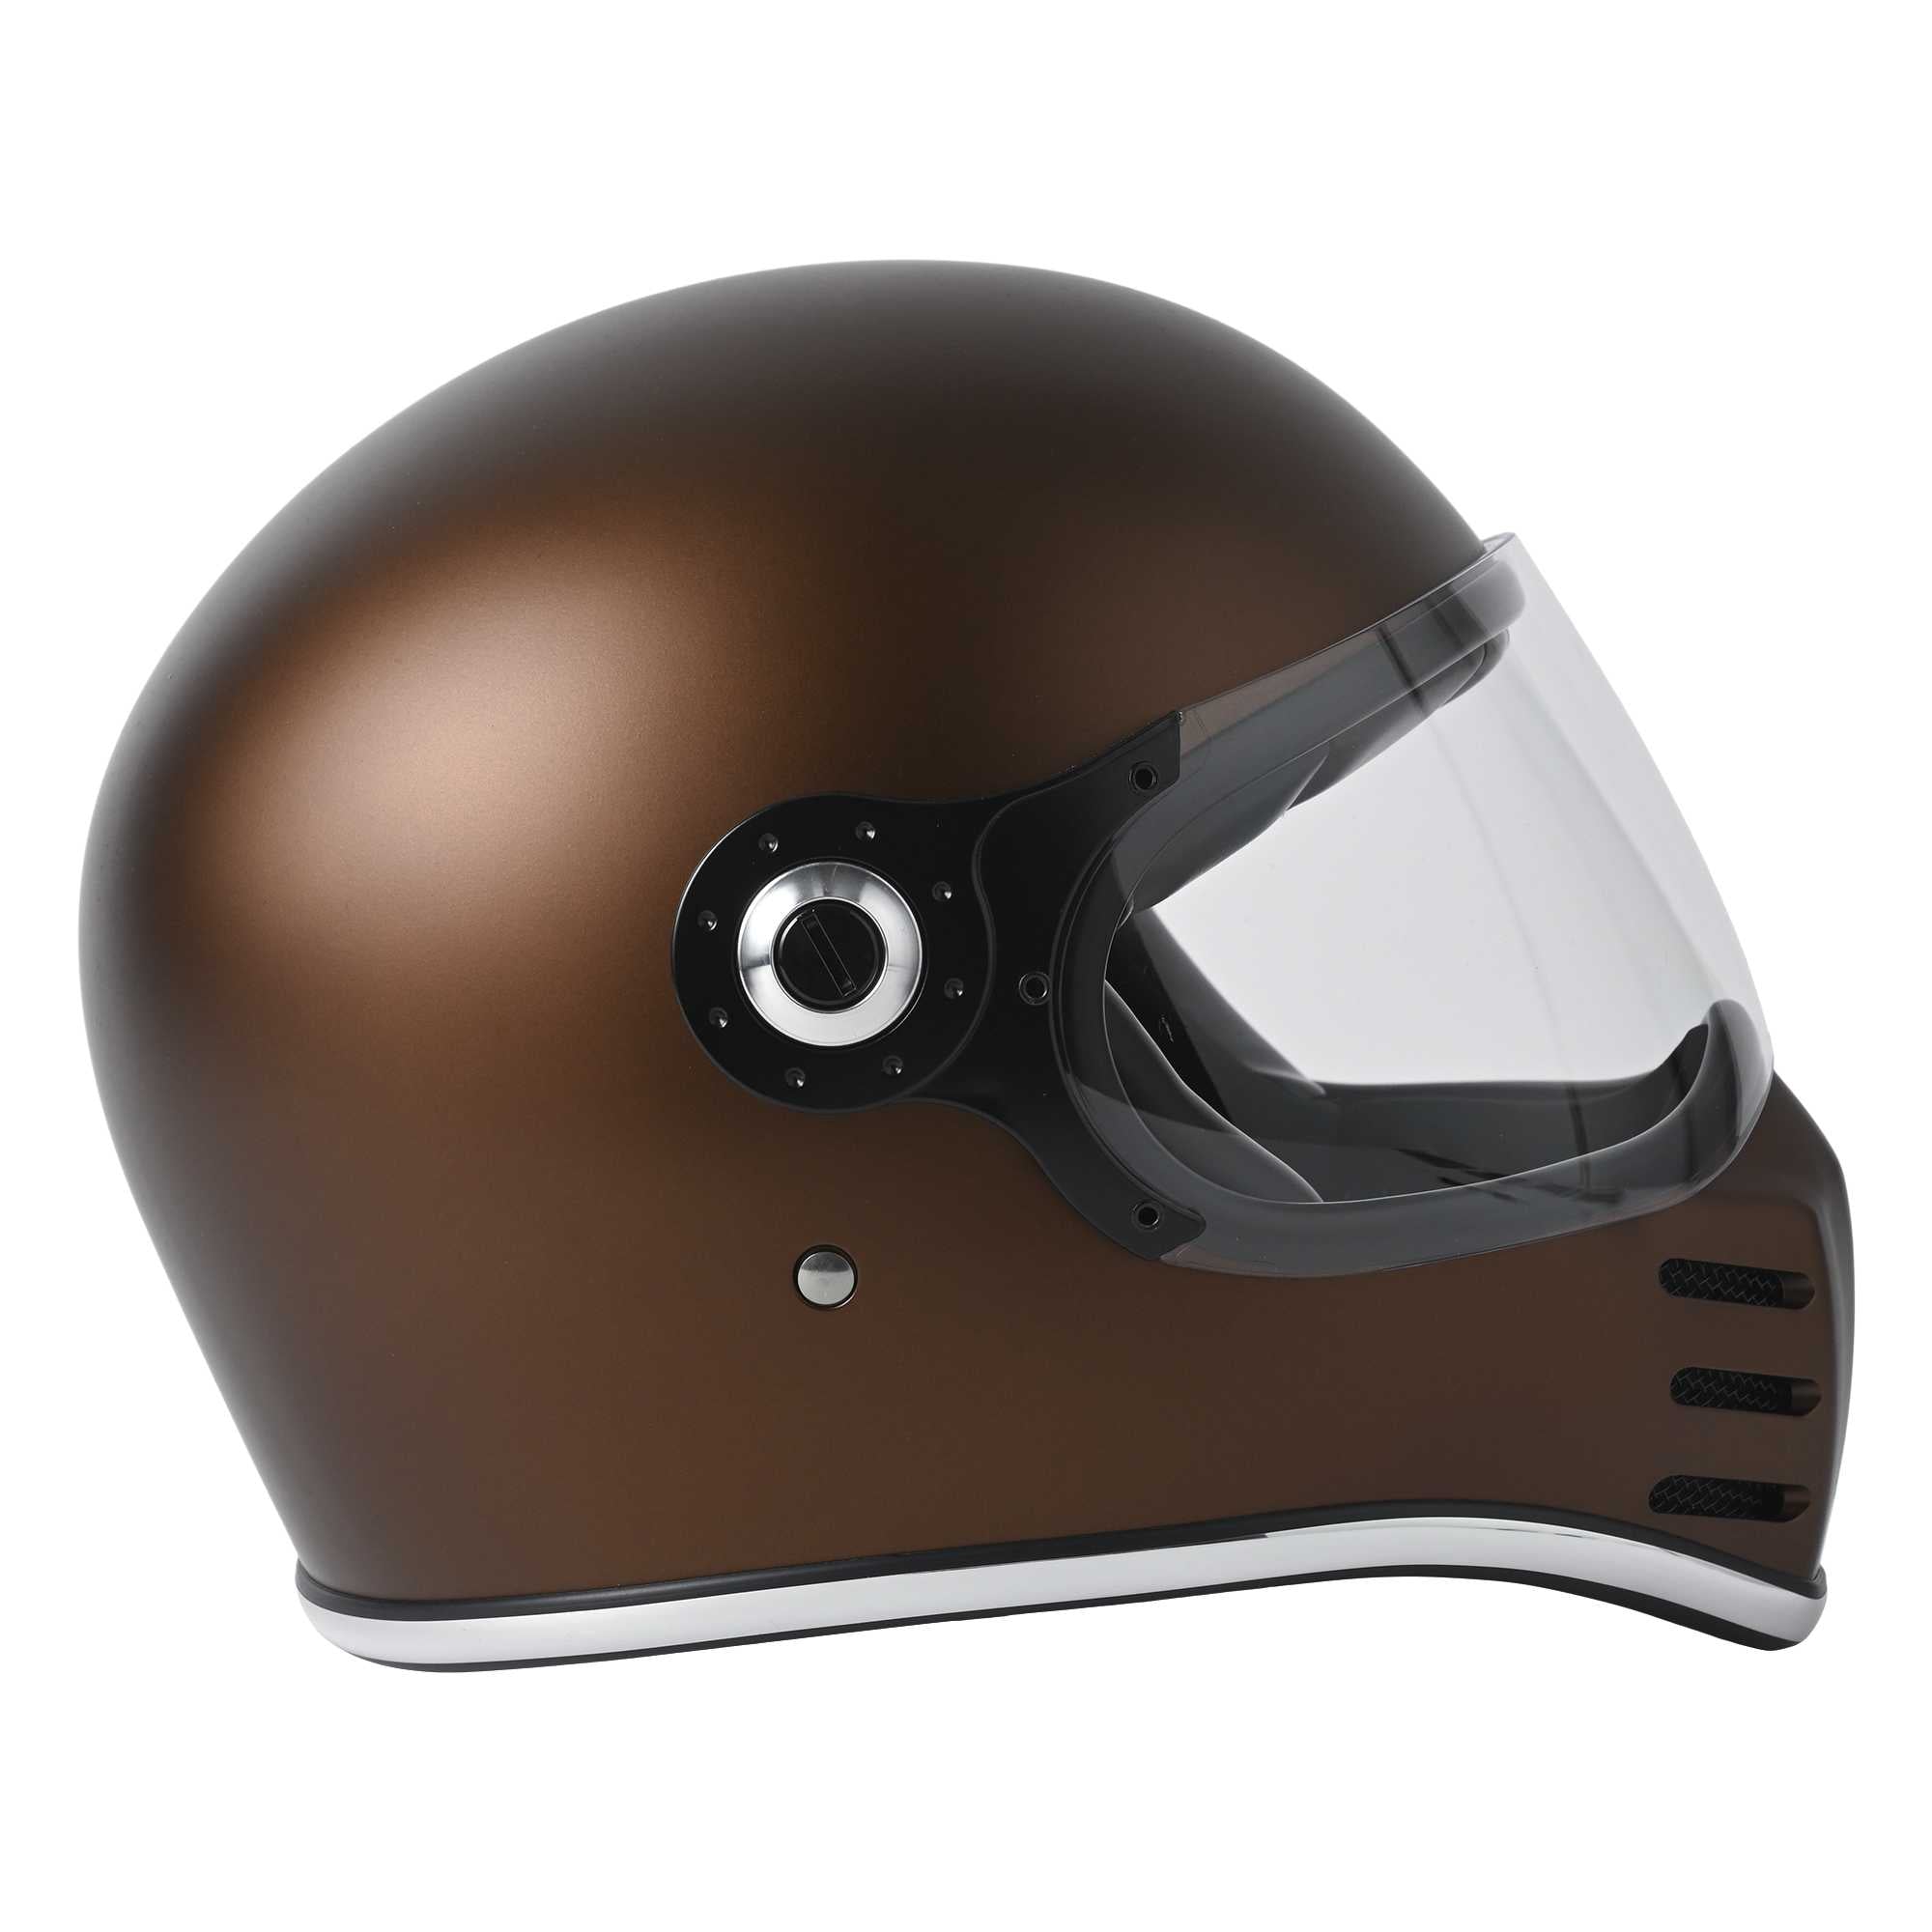 RIDEZ X HELMET 数量限定モデル MATT BROWN バイク用フルフェイスヘルメット